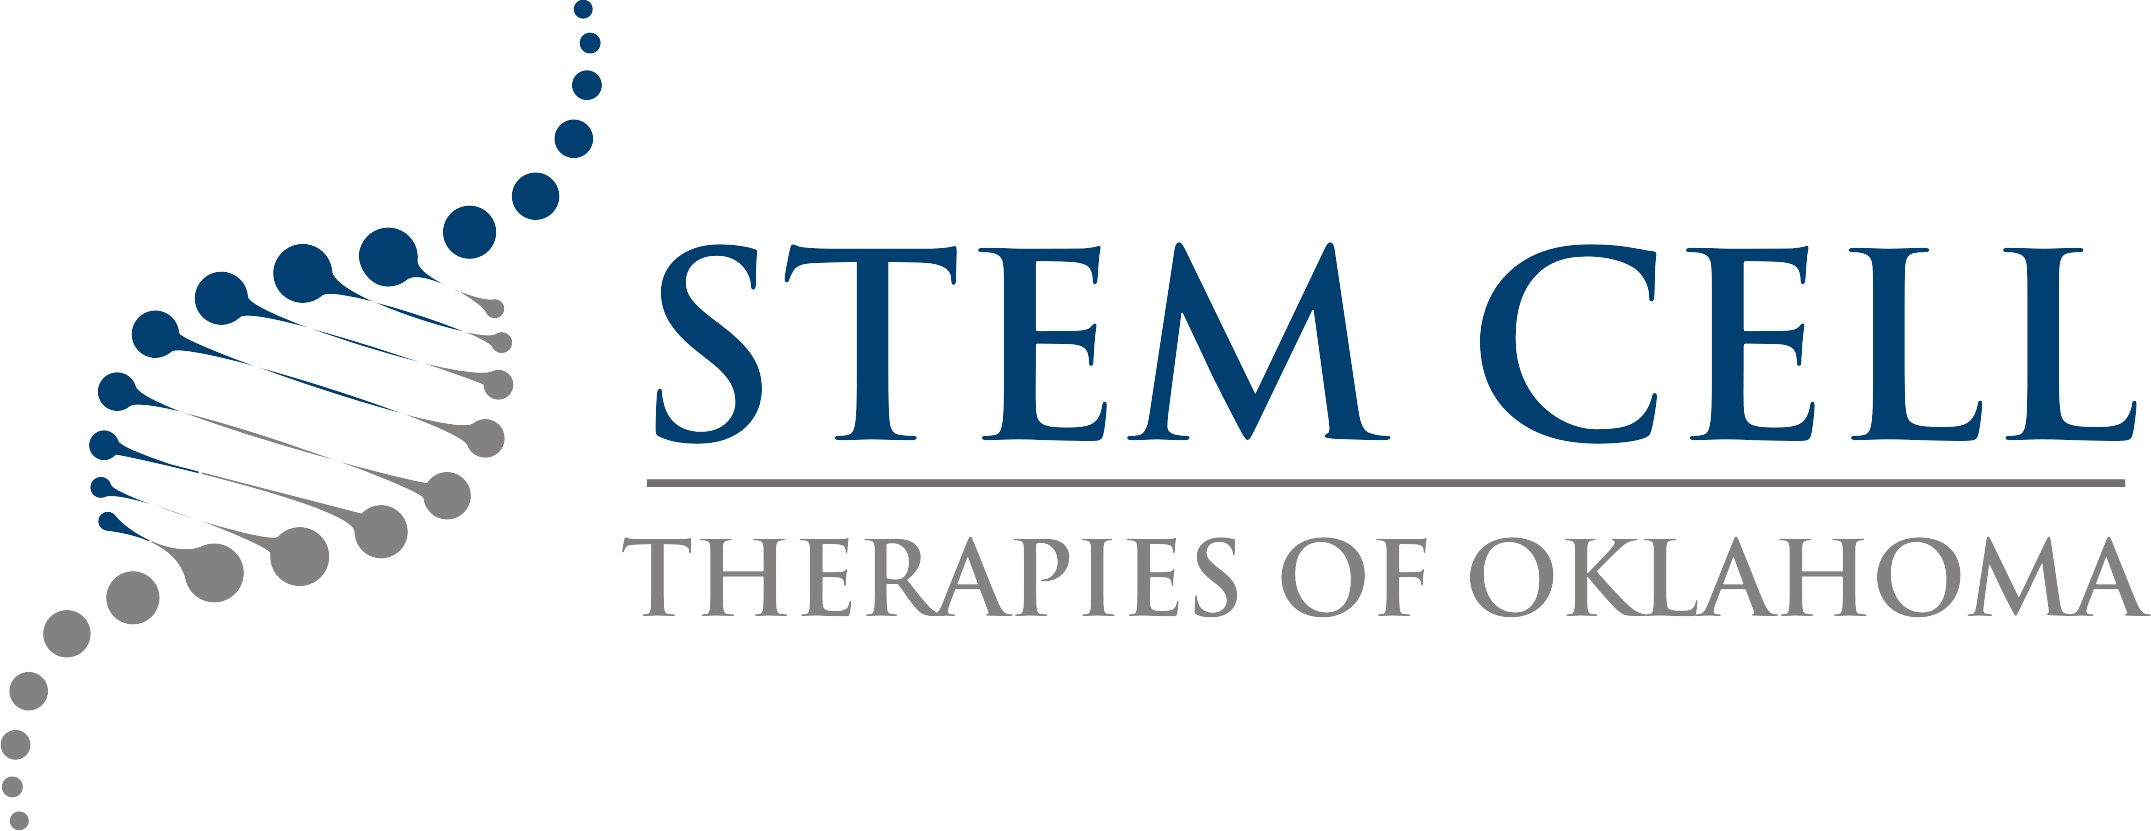 Stem Cell Therapies of Oklahoma